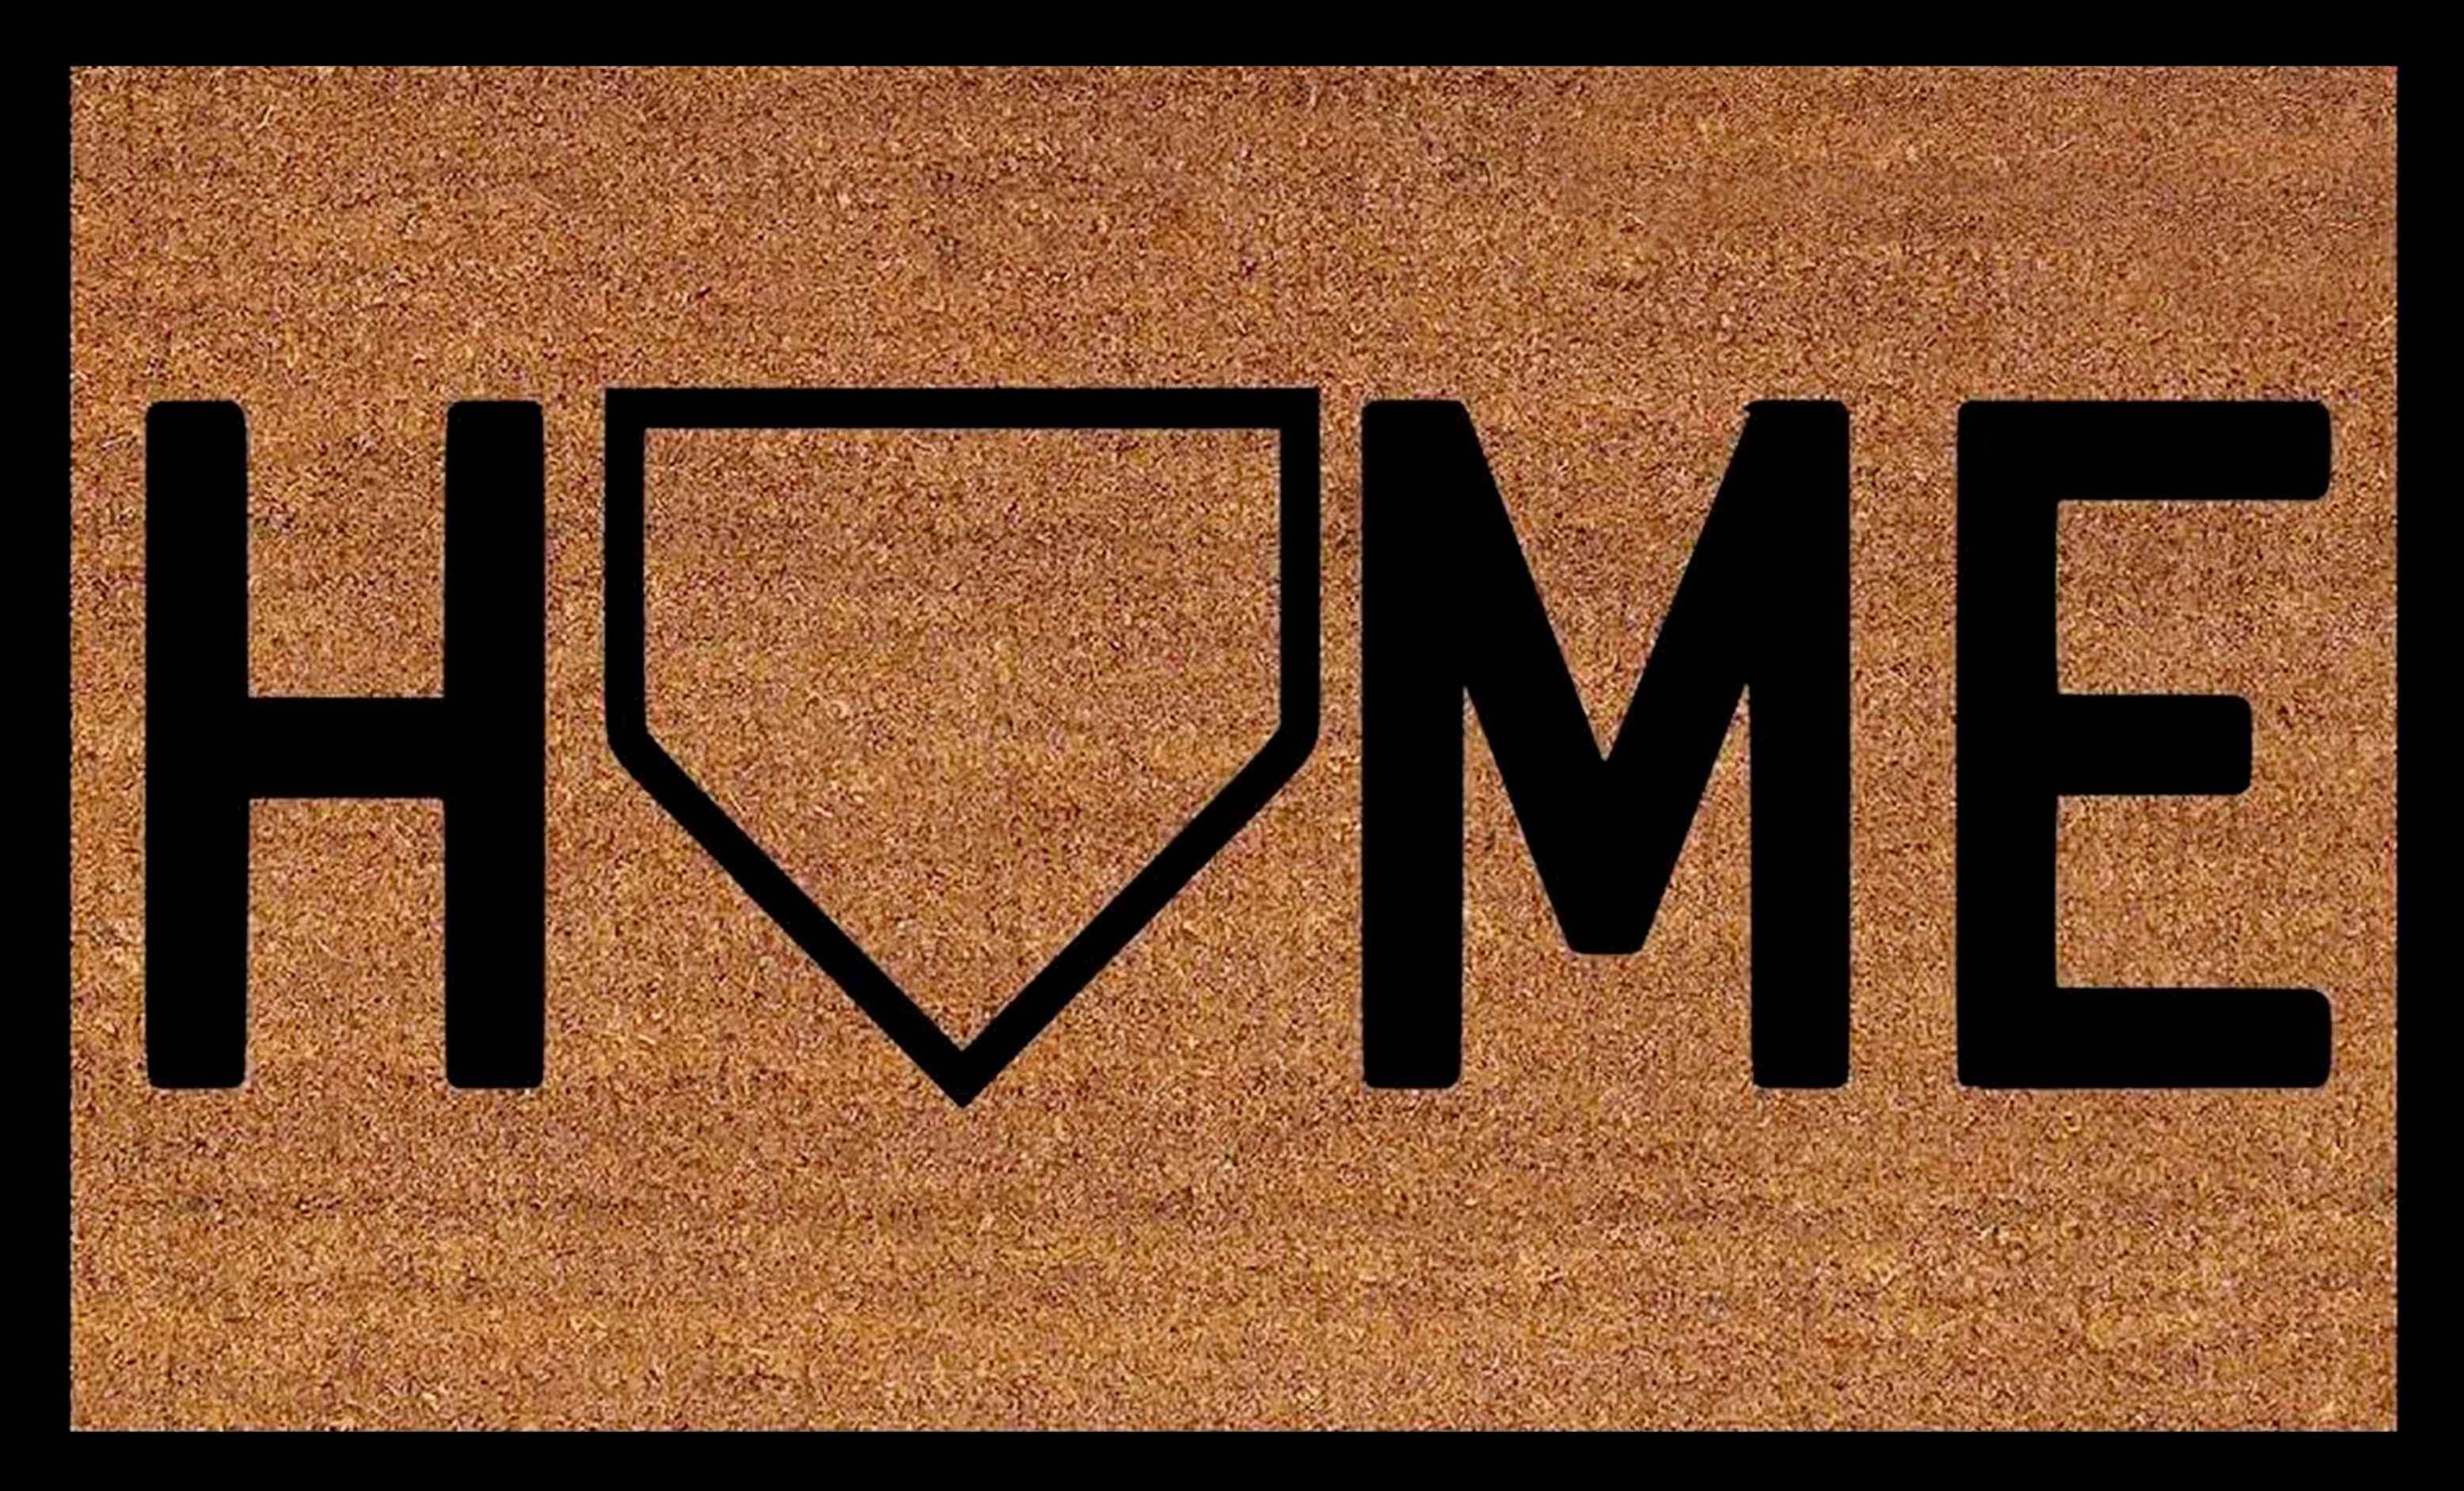 https://ae01.alicdn.com/kf/Hc23a8d95568b46c88df1c4764680450de/Home-Plate-Home-Doormat-Baseball-Coir-Door-Mat-Welcome-Mat-with-simple-style-Dirt-resistant-Mat.jpg